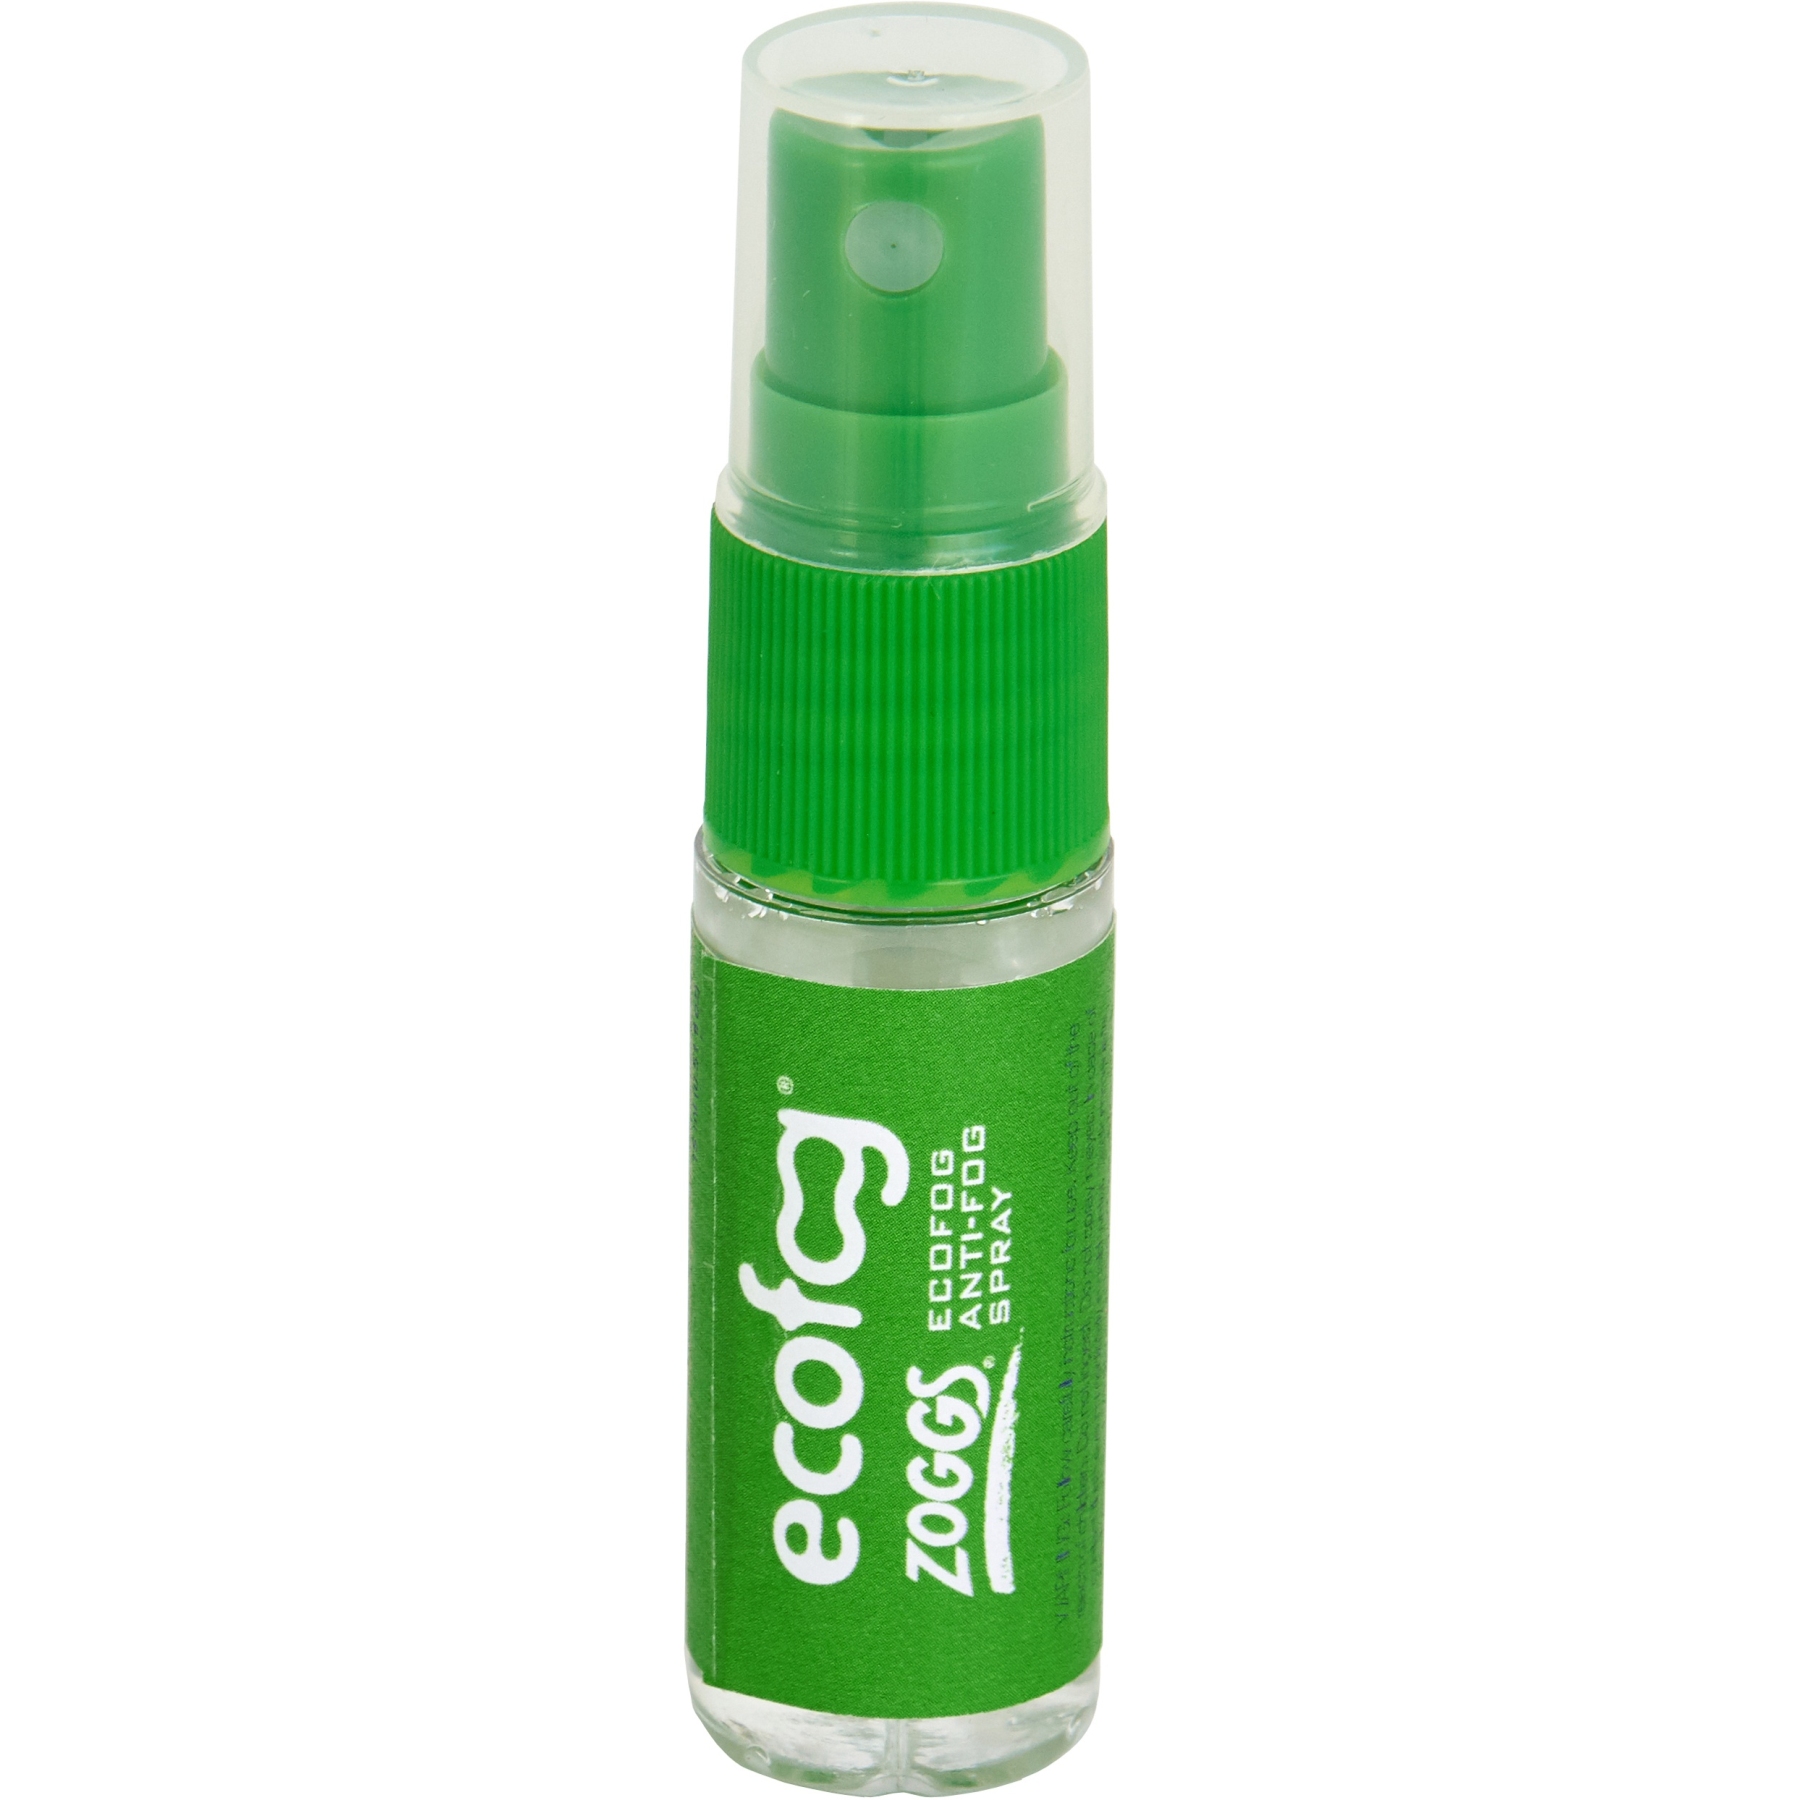 Productfoto van Zoggs ECOFOG Anti-Fog Spray 15ml